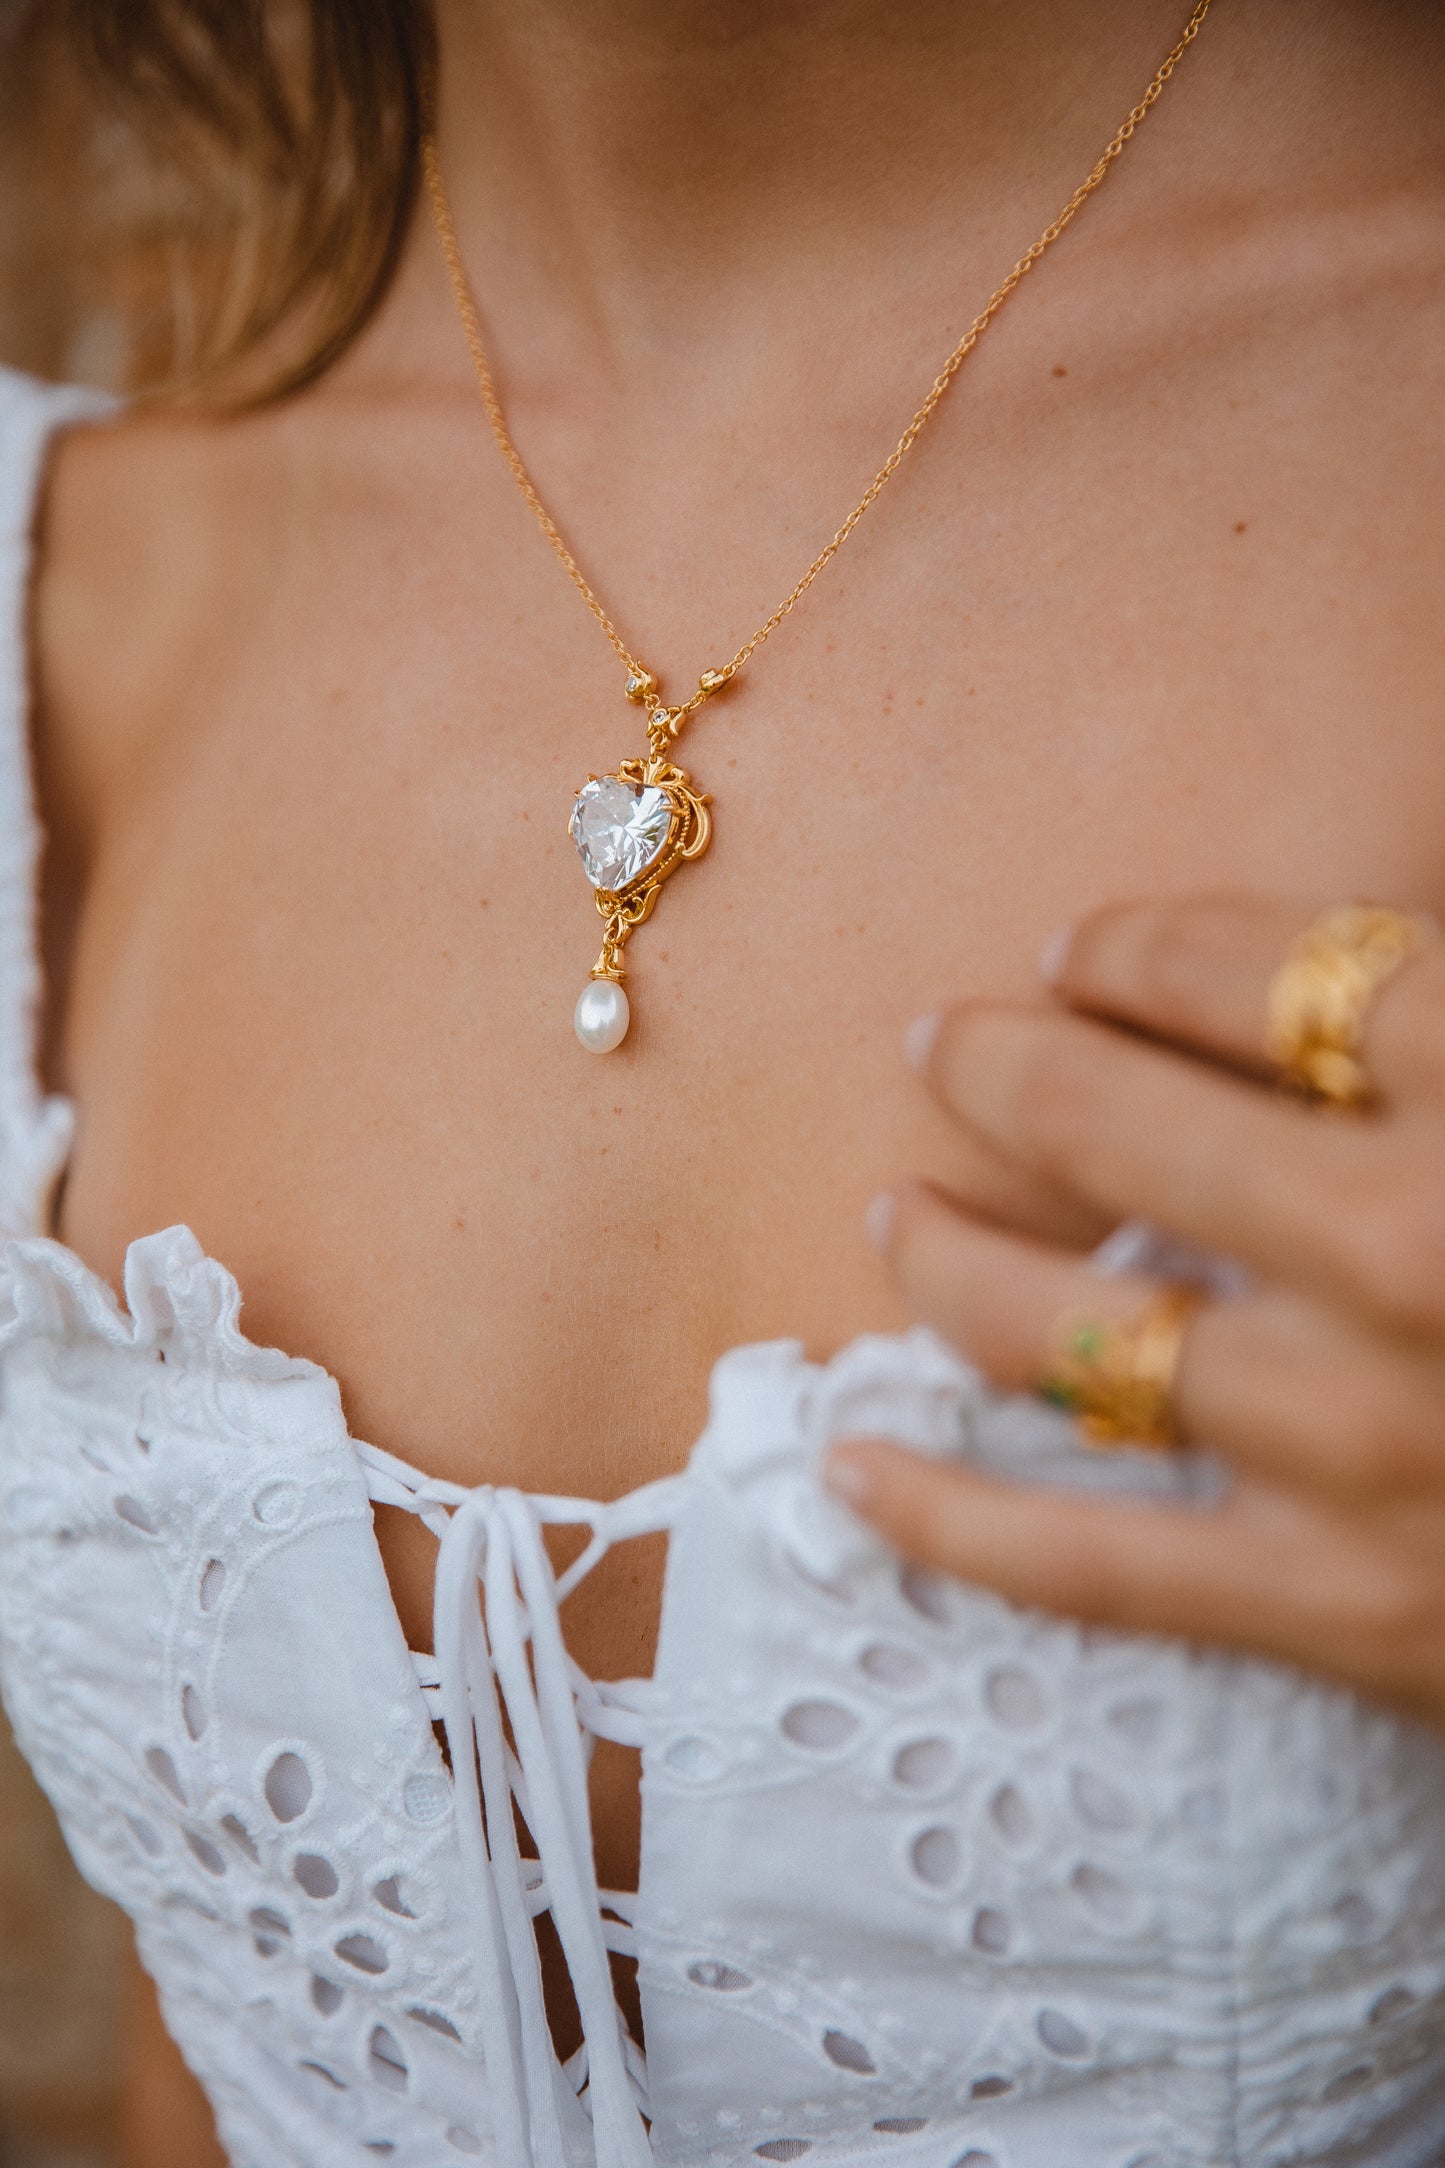 Anastasia necklace